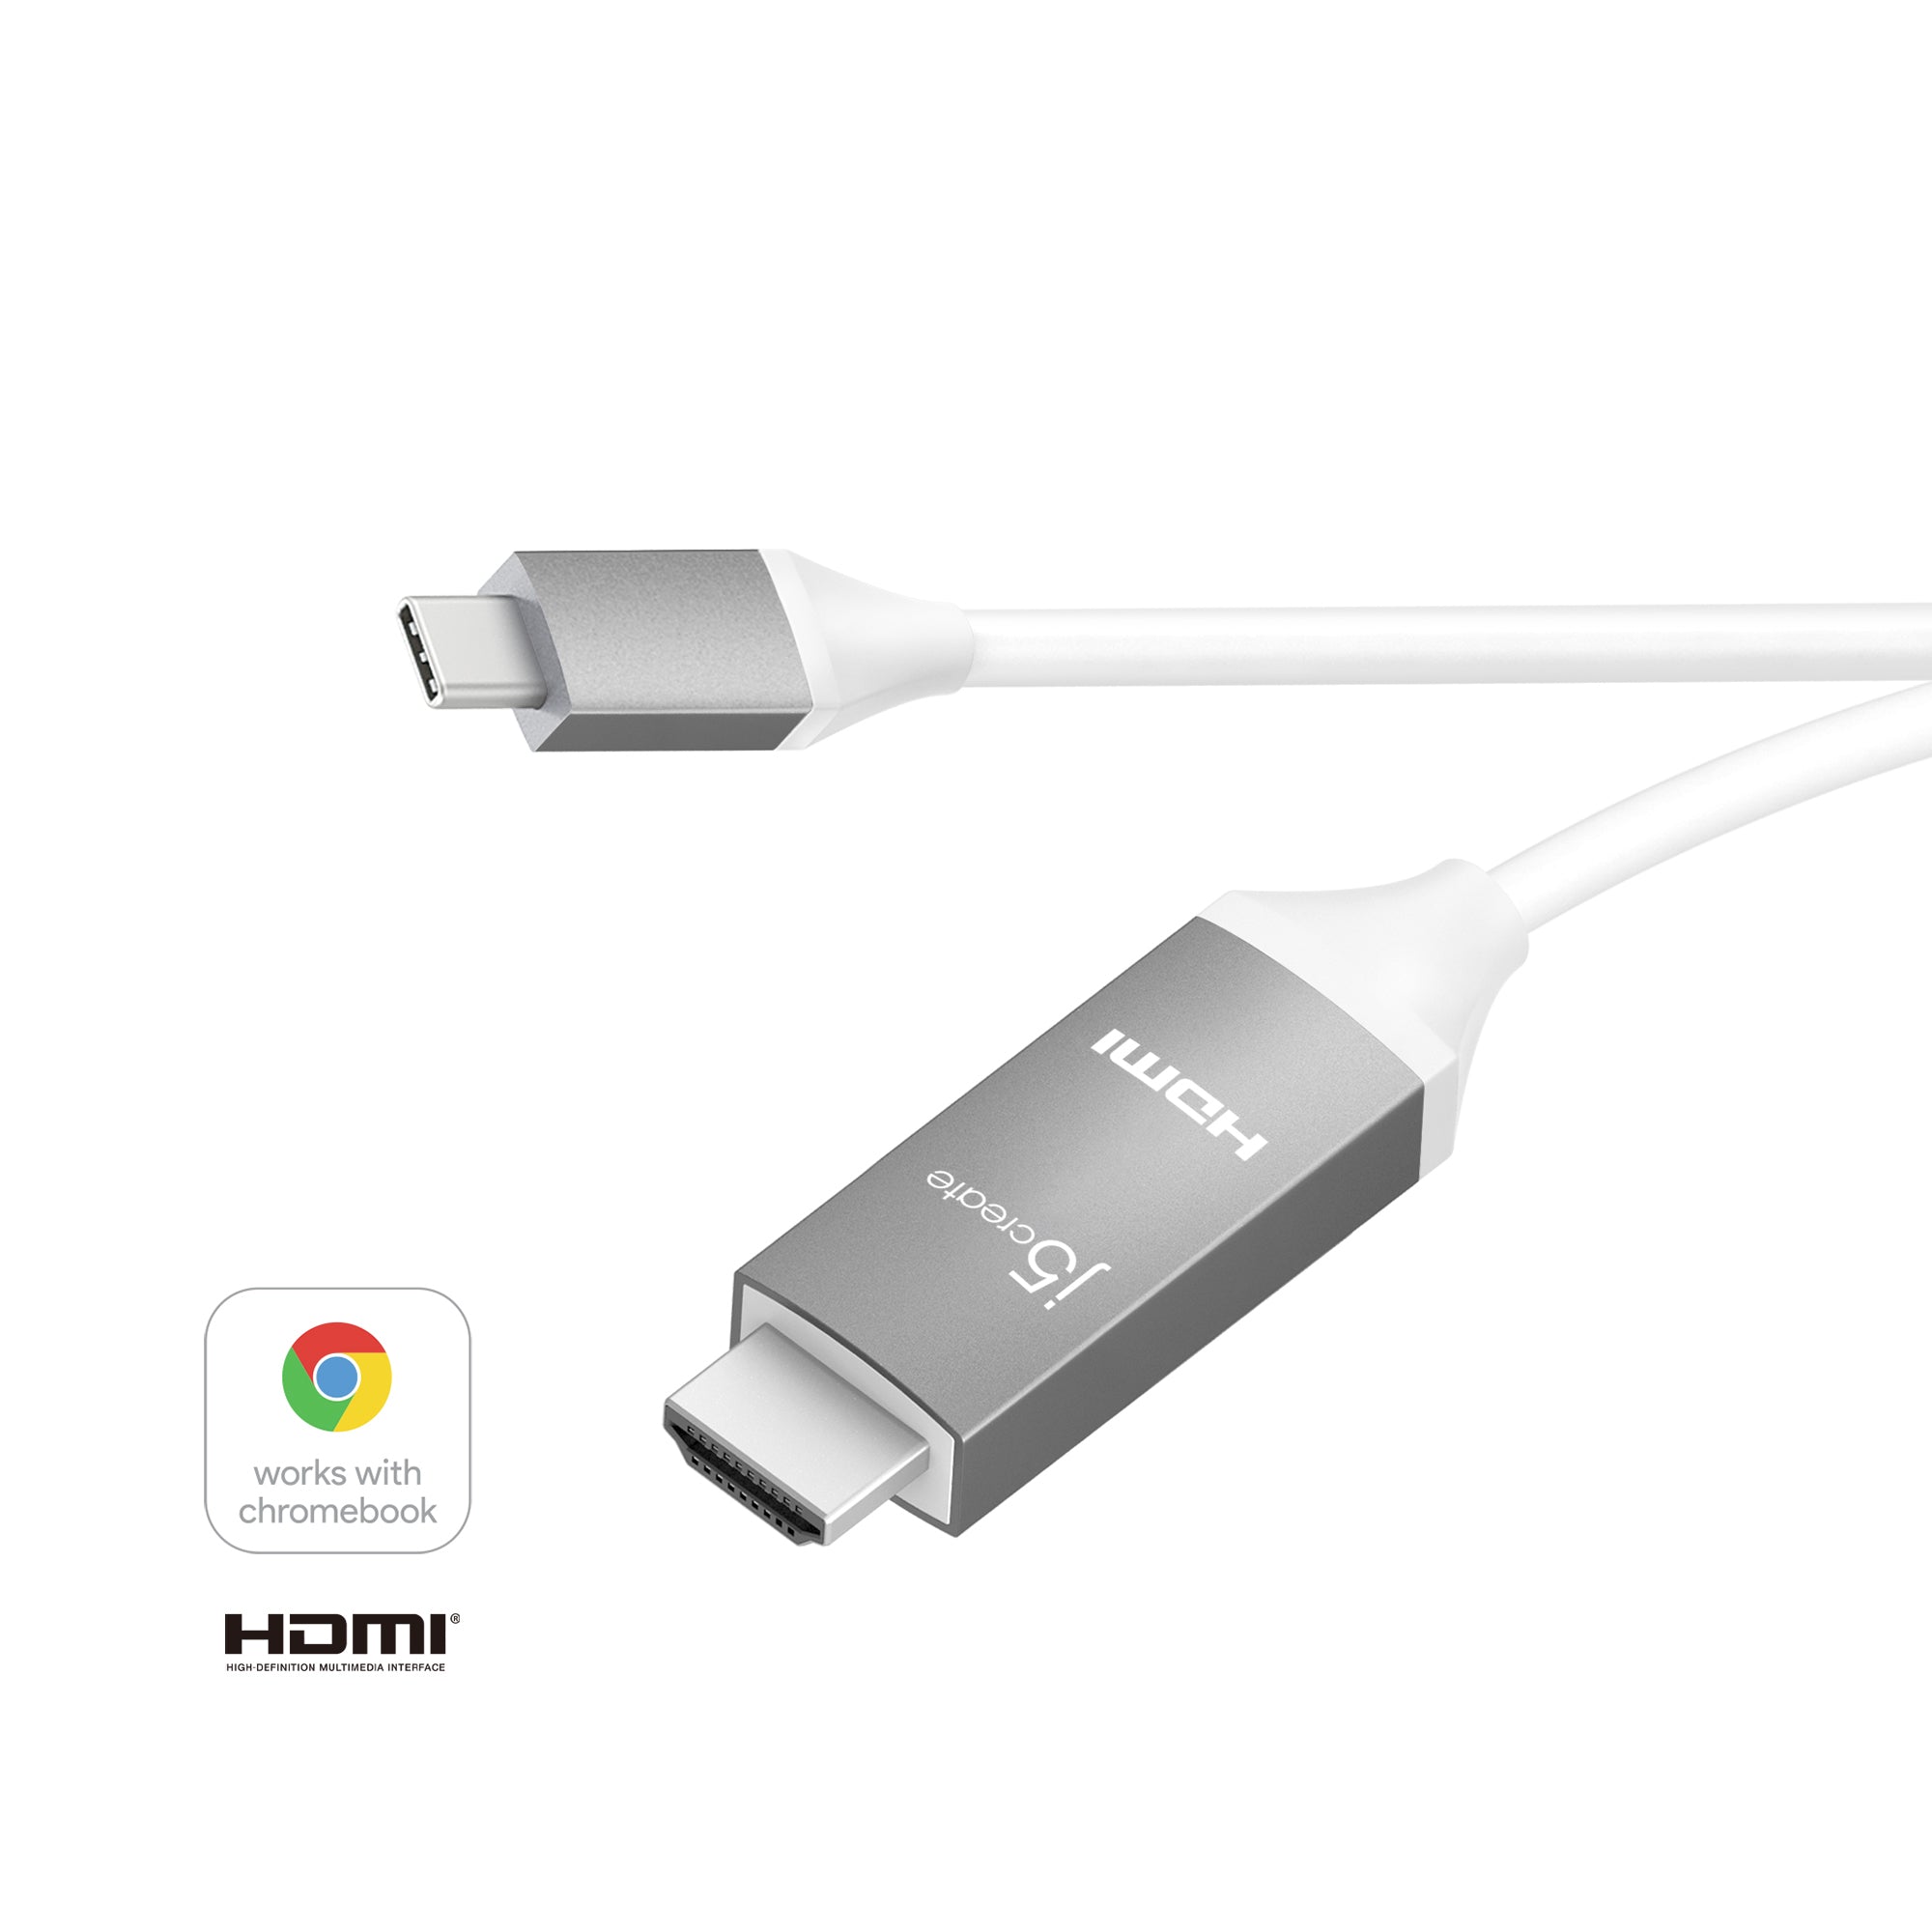 Cable de vídeo 4K HDMI tipo A 2.0 1.5M